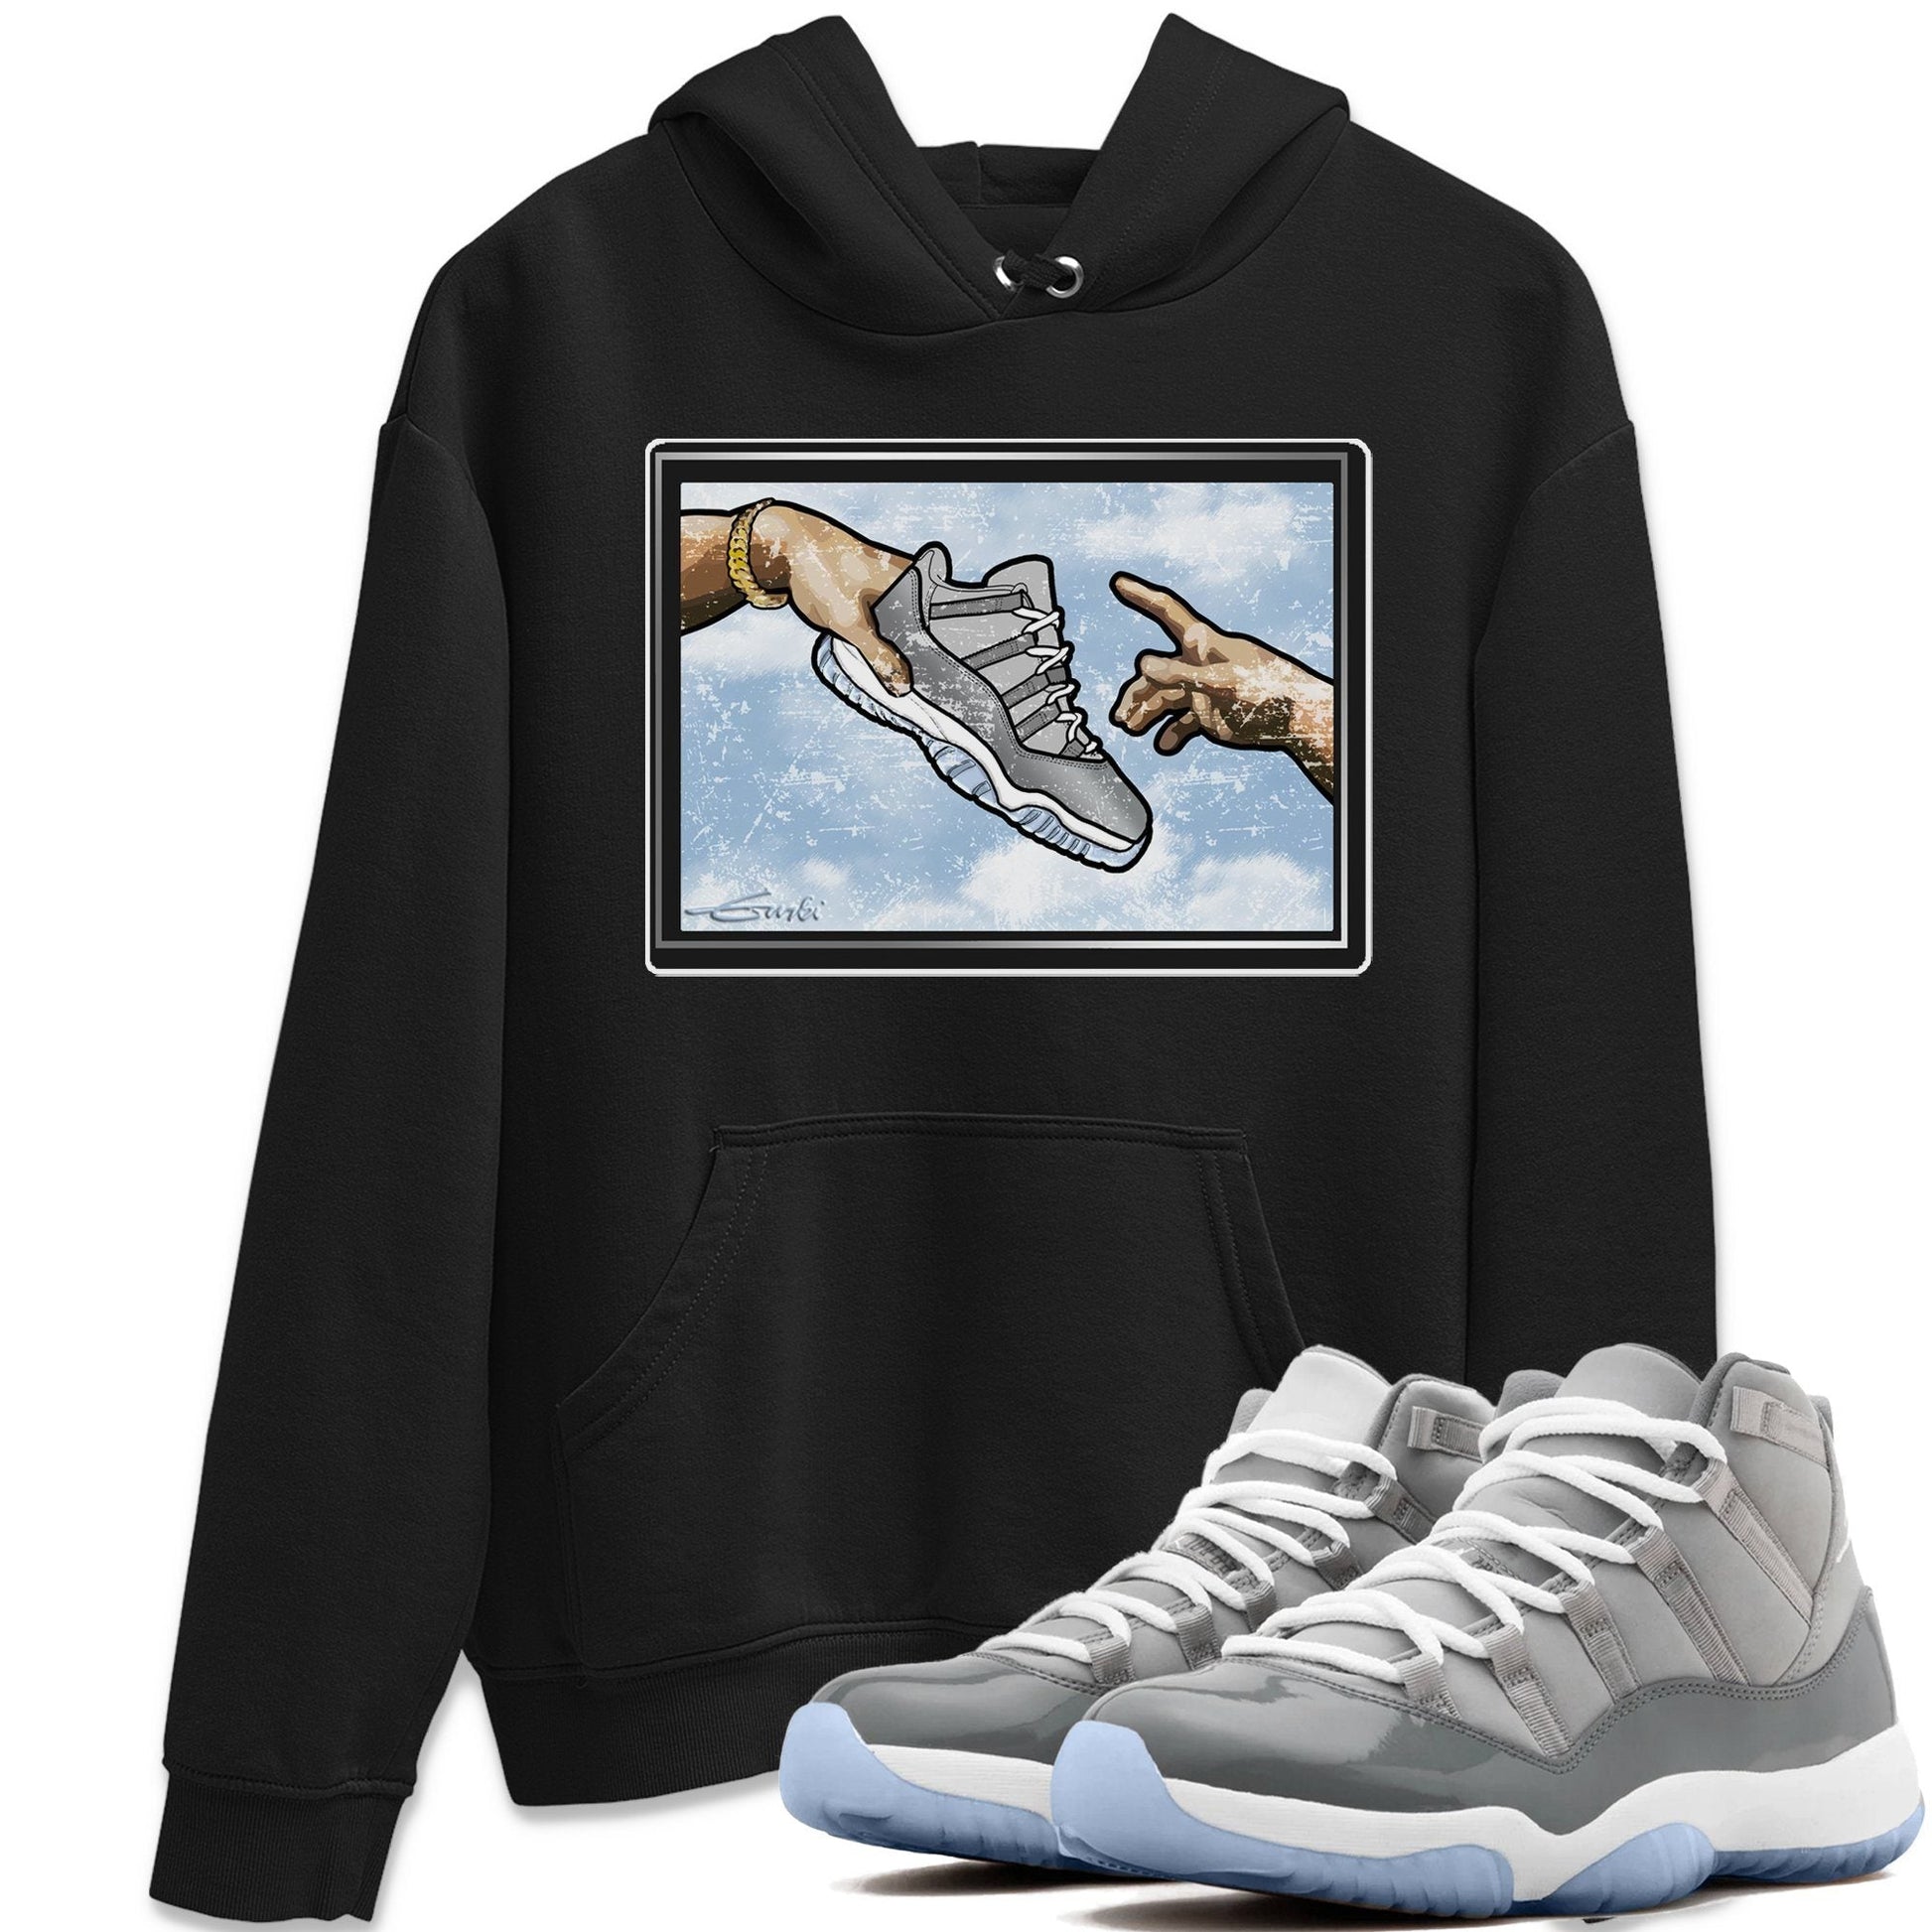 Jordan 11 Cool Grey Sneaker Match Tees Adam's Creation Sneaker Tees Jordan 11 Cool Grey Sneaker Release Tees Unisex Shirts